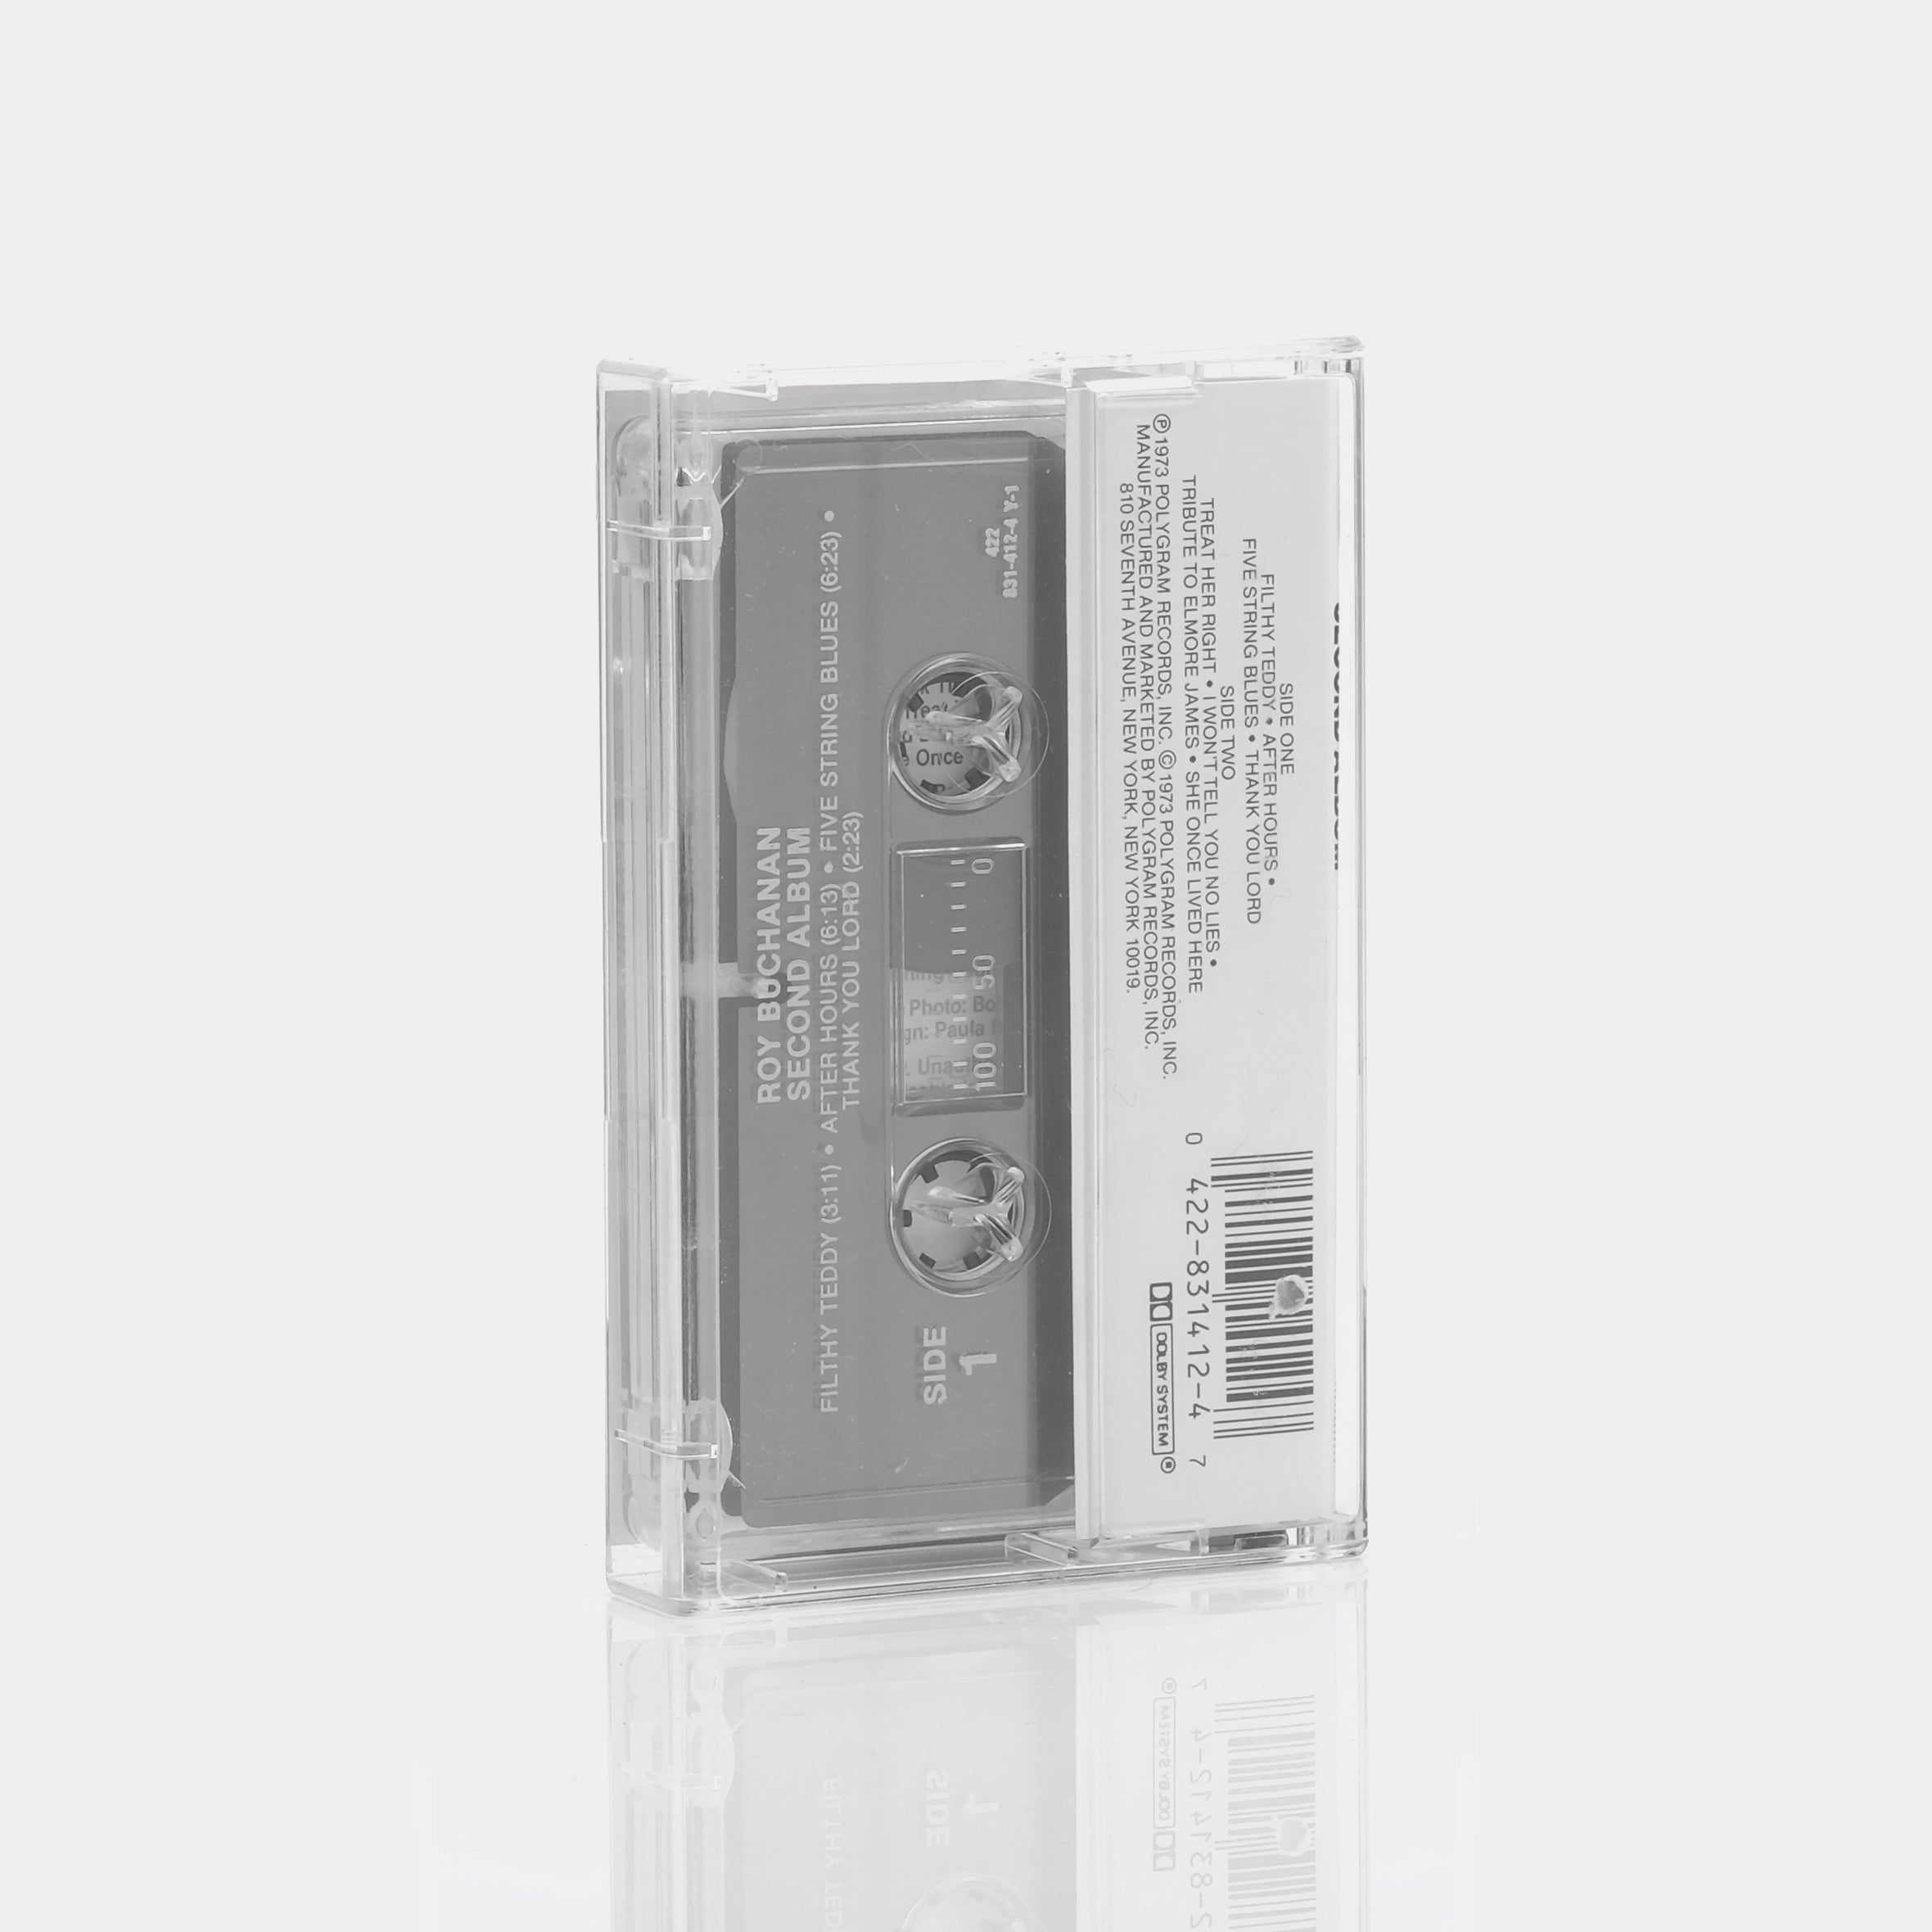 Roy Buchanan - Second Album Cassette Tape